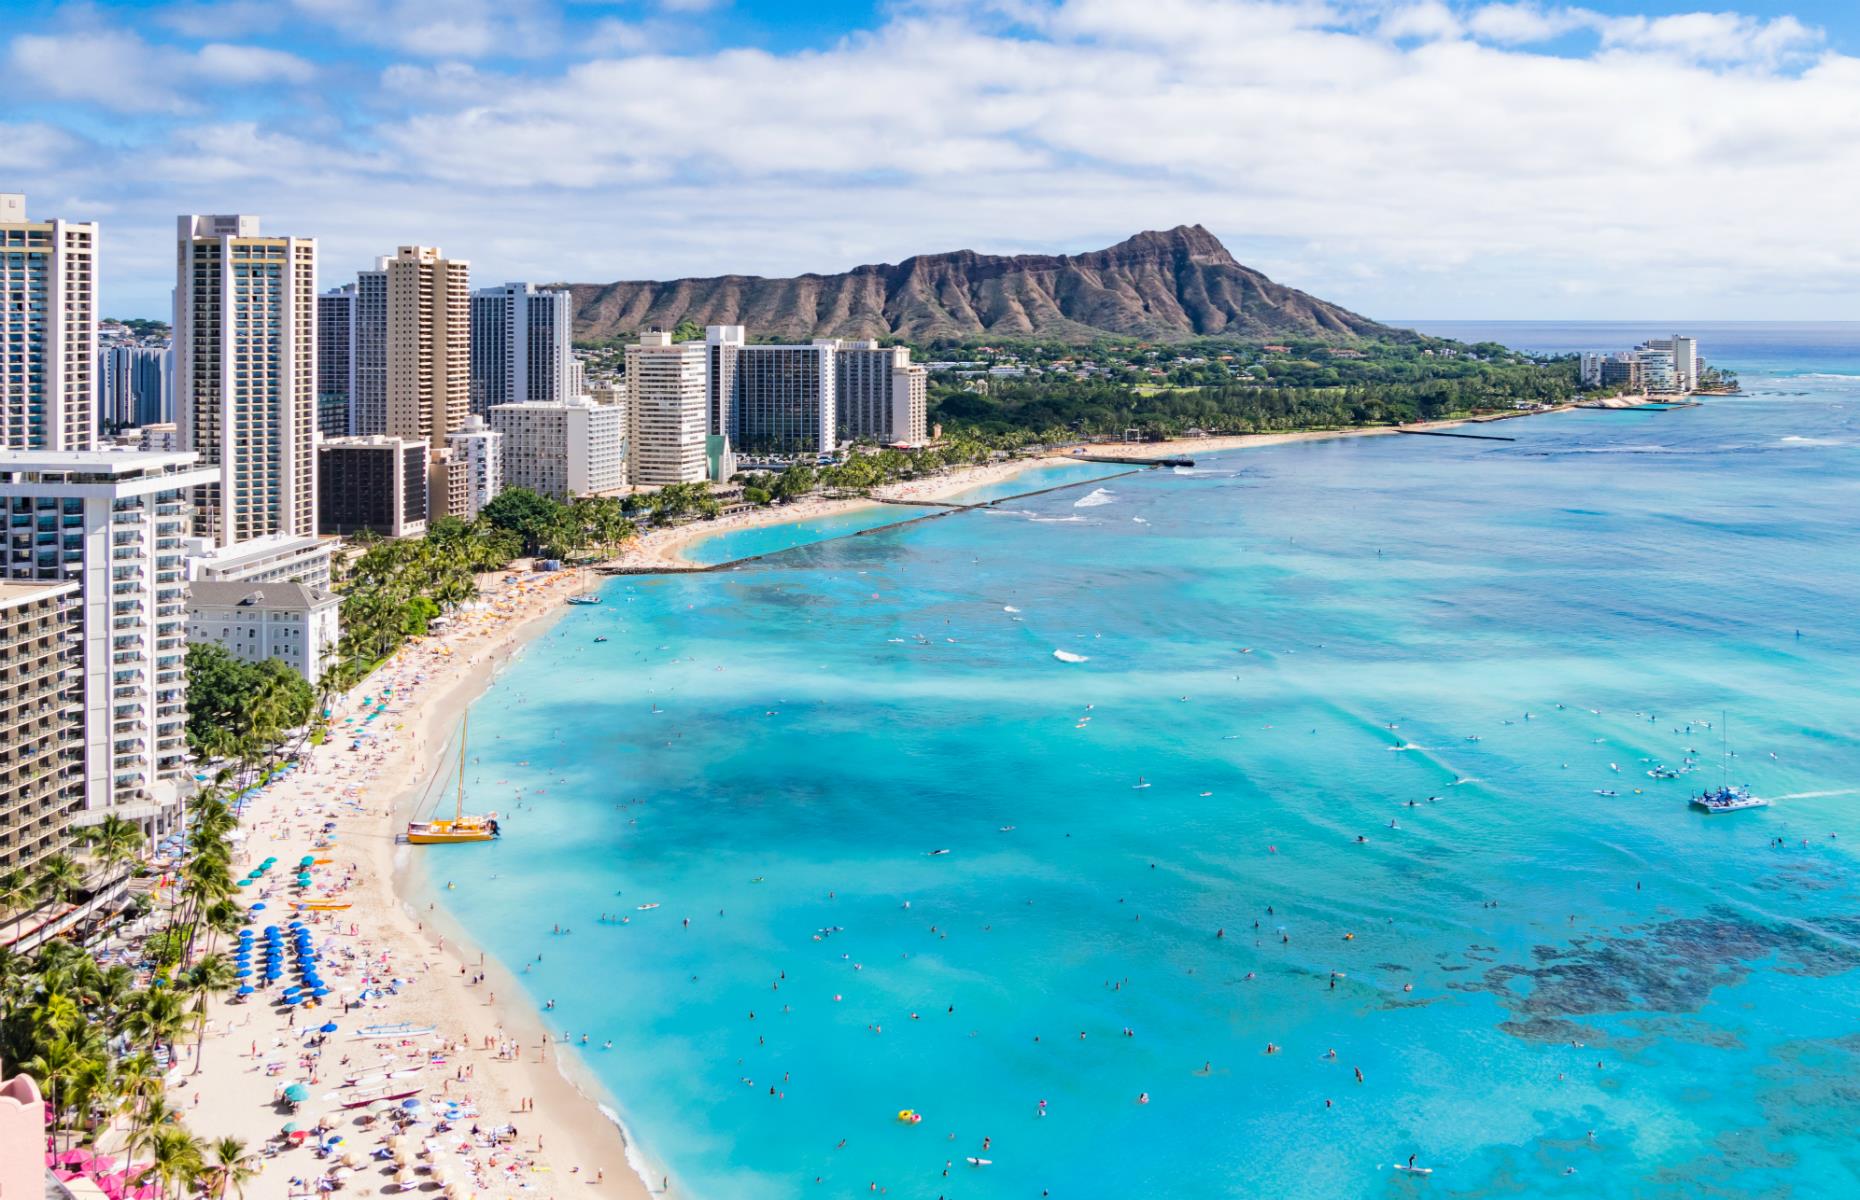 Hawaii: 17.3 vacation days